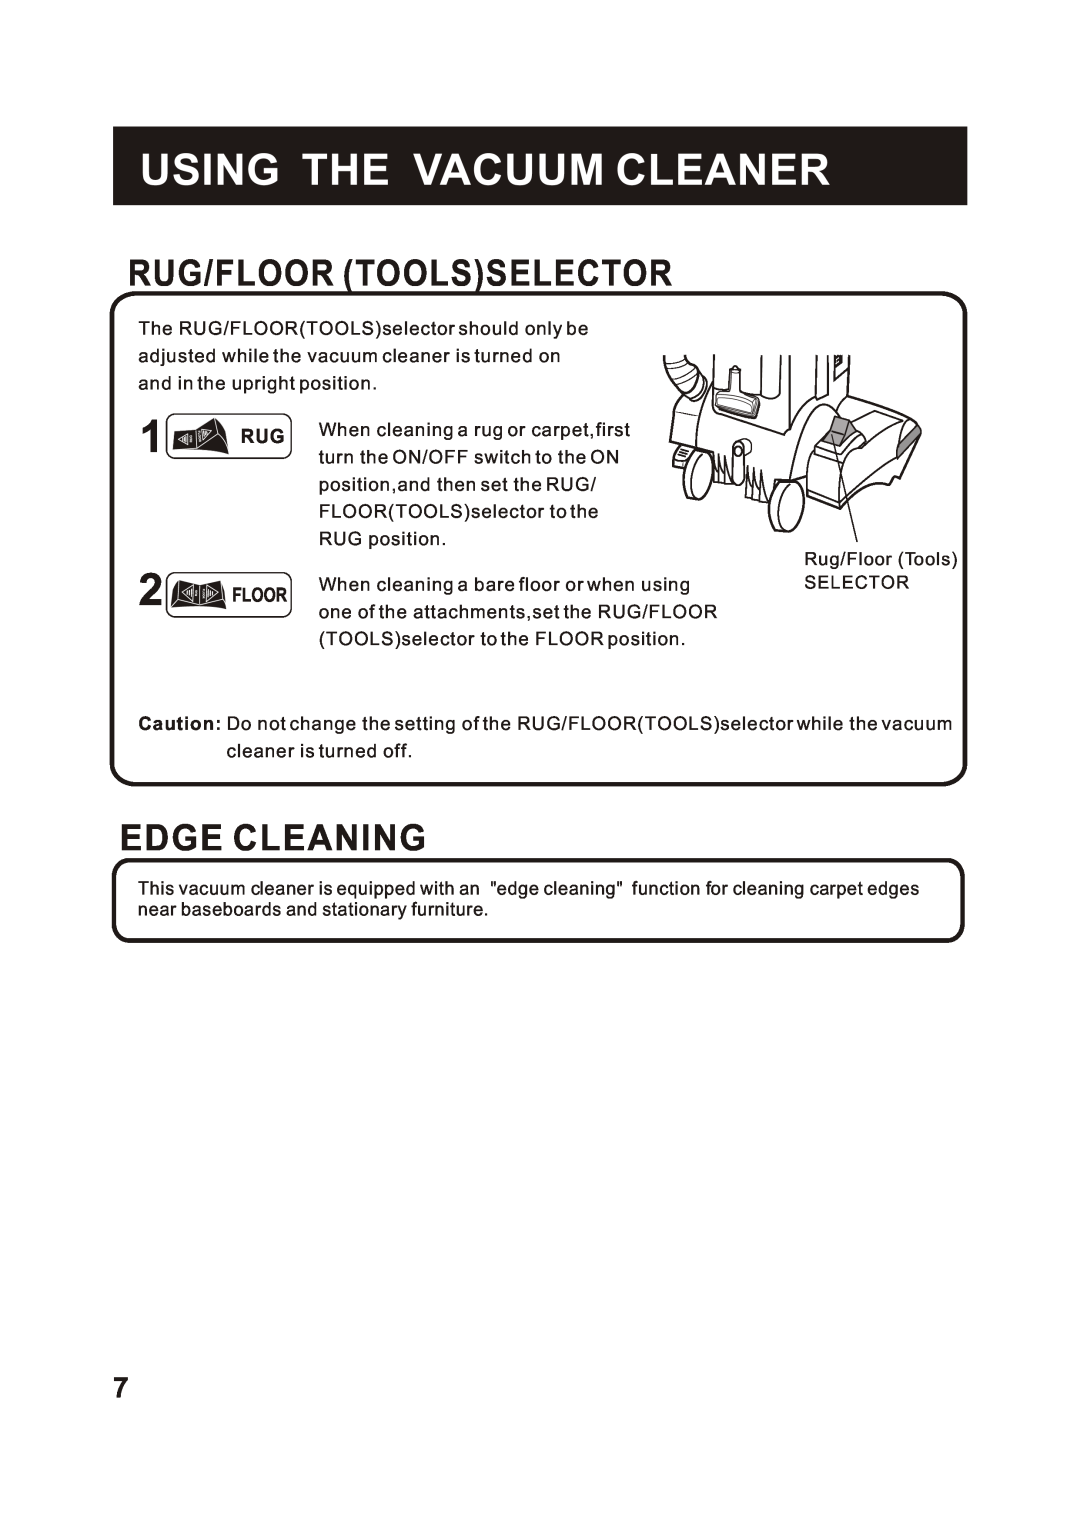 Fantom Vacuum FM741B instruction manual Rug/Floor Toolsselector, Edge Cleaning, Using The Vacuum Cleaner 